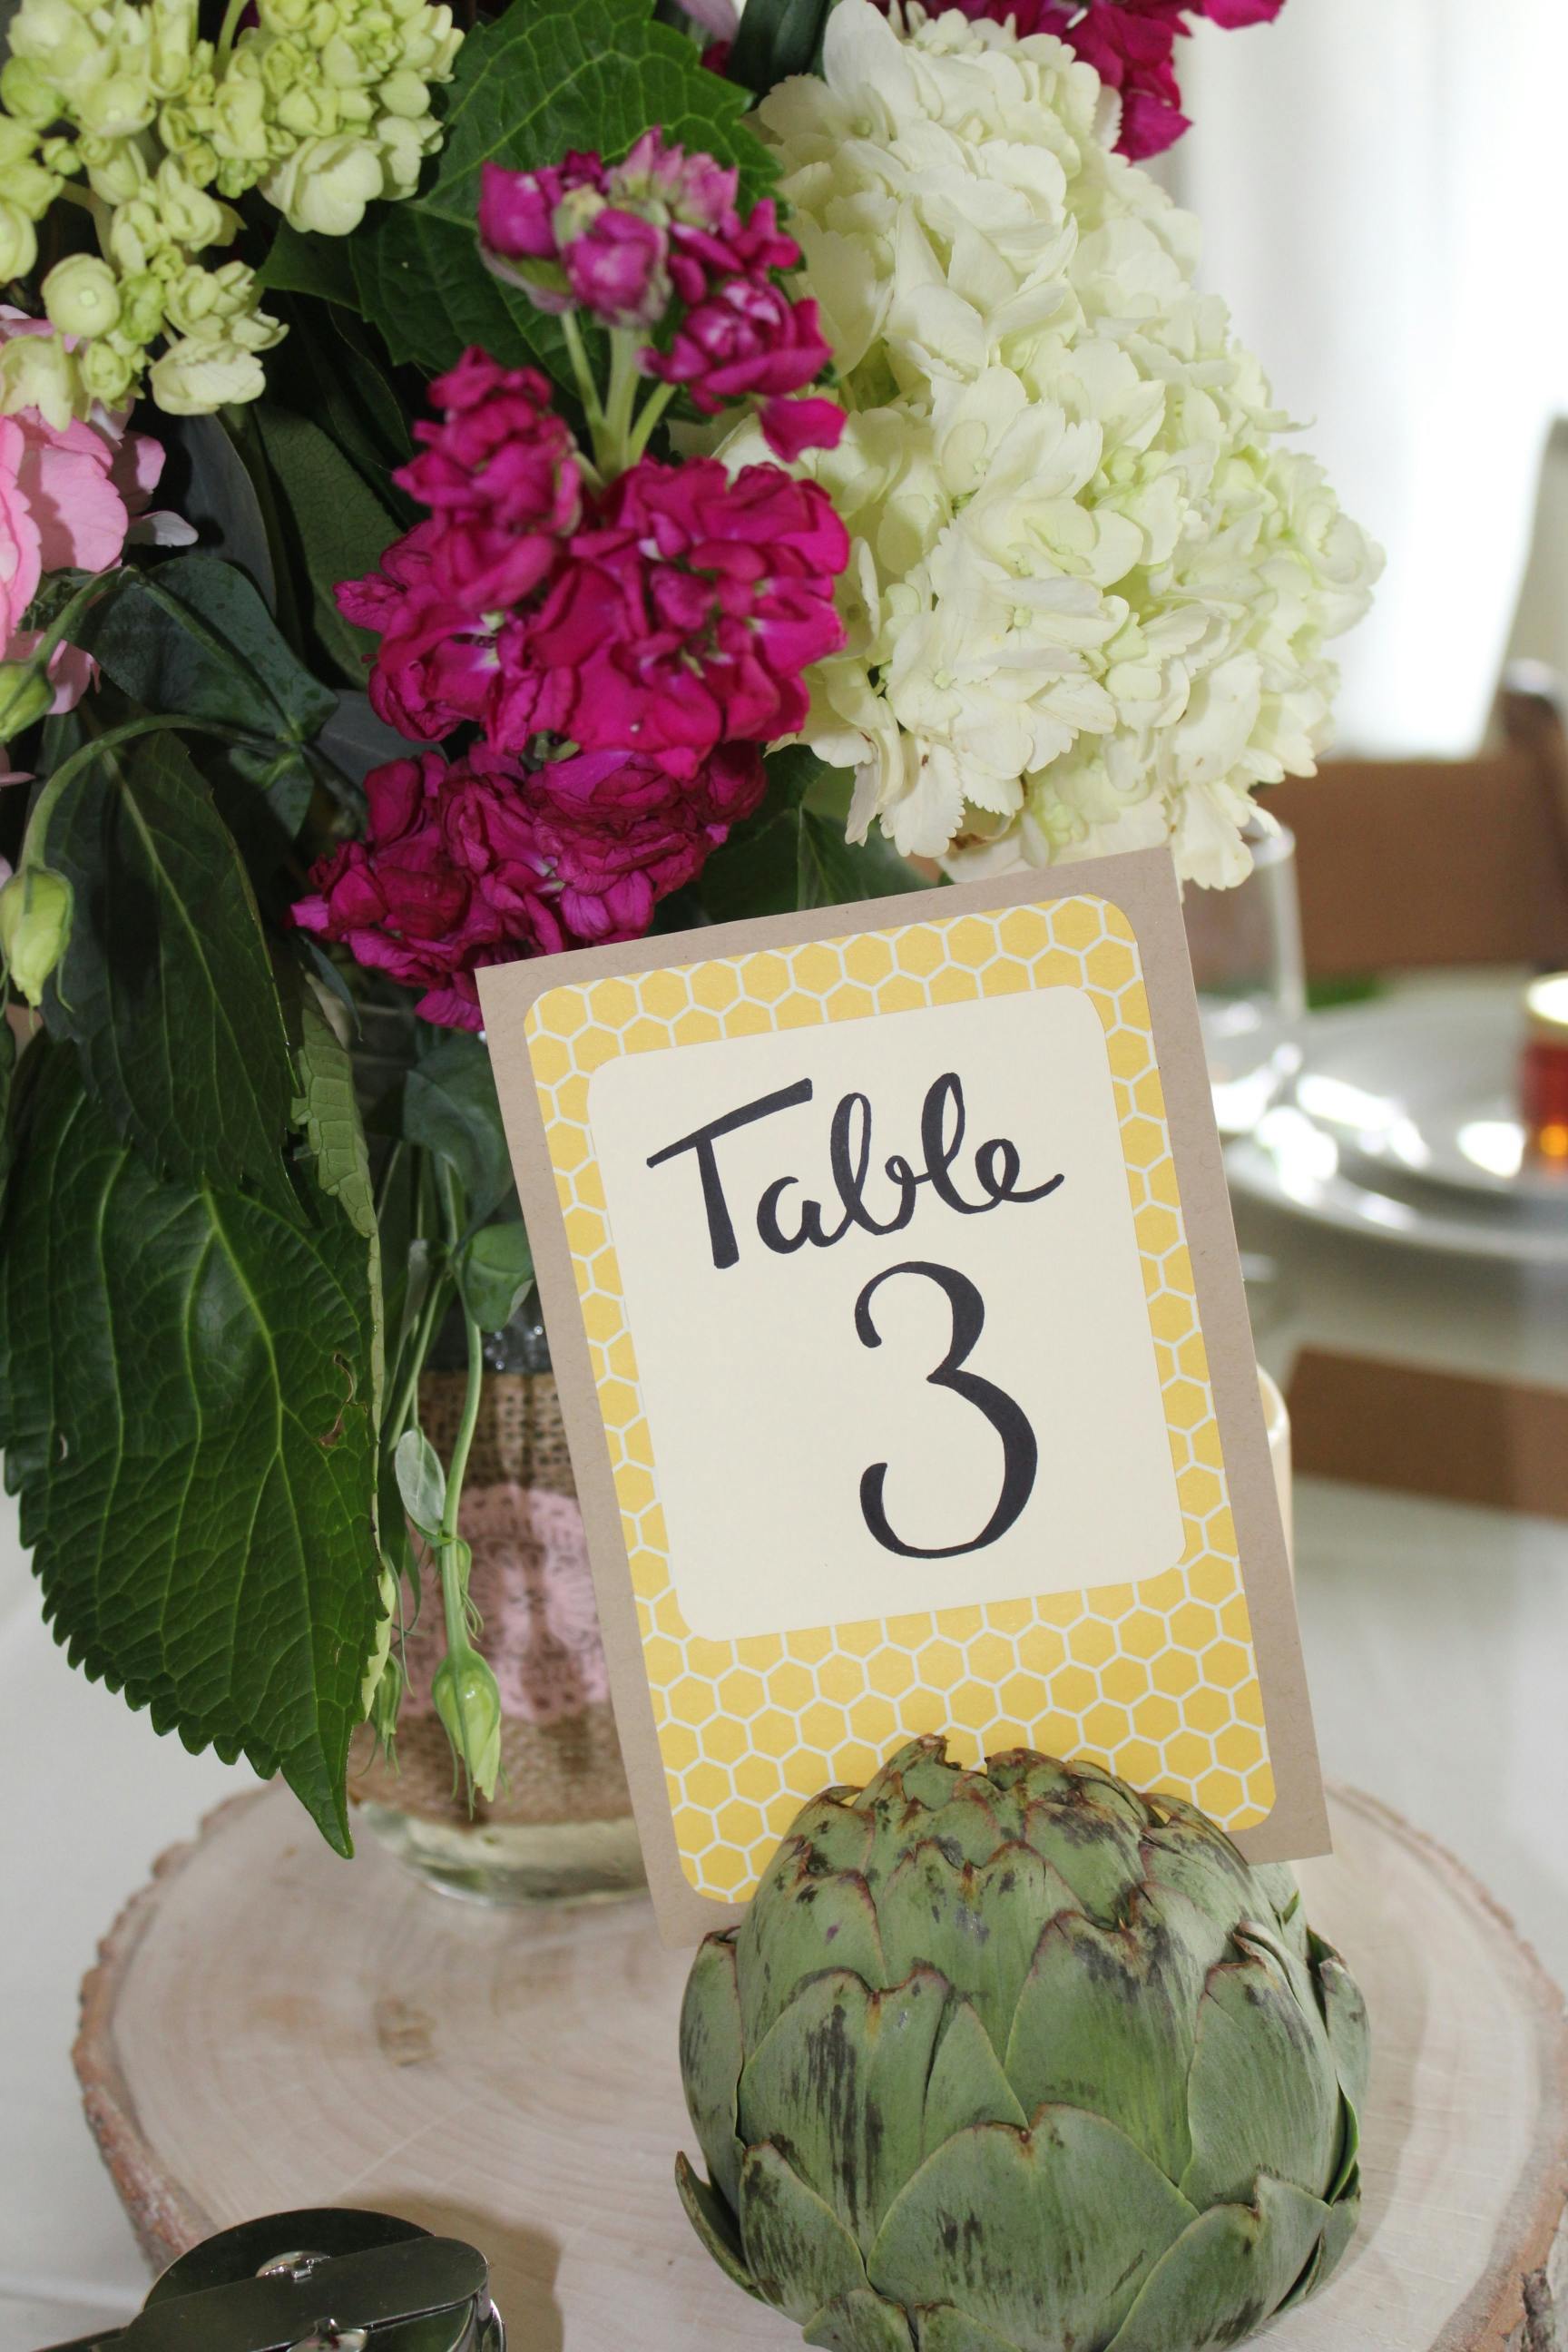 Free stock photo of beautiful flowers, wedding table